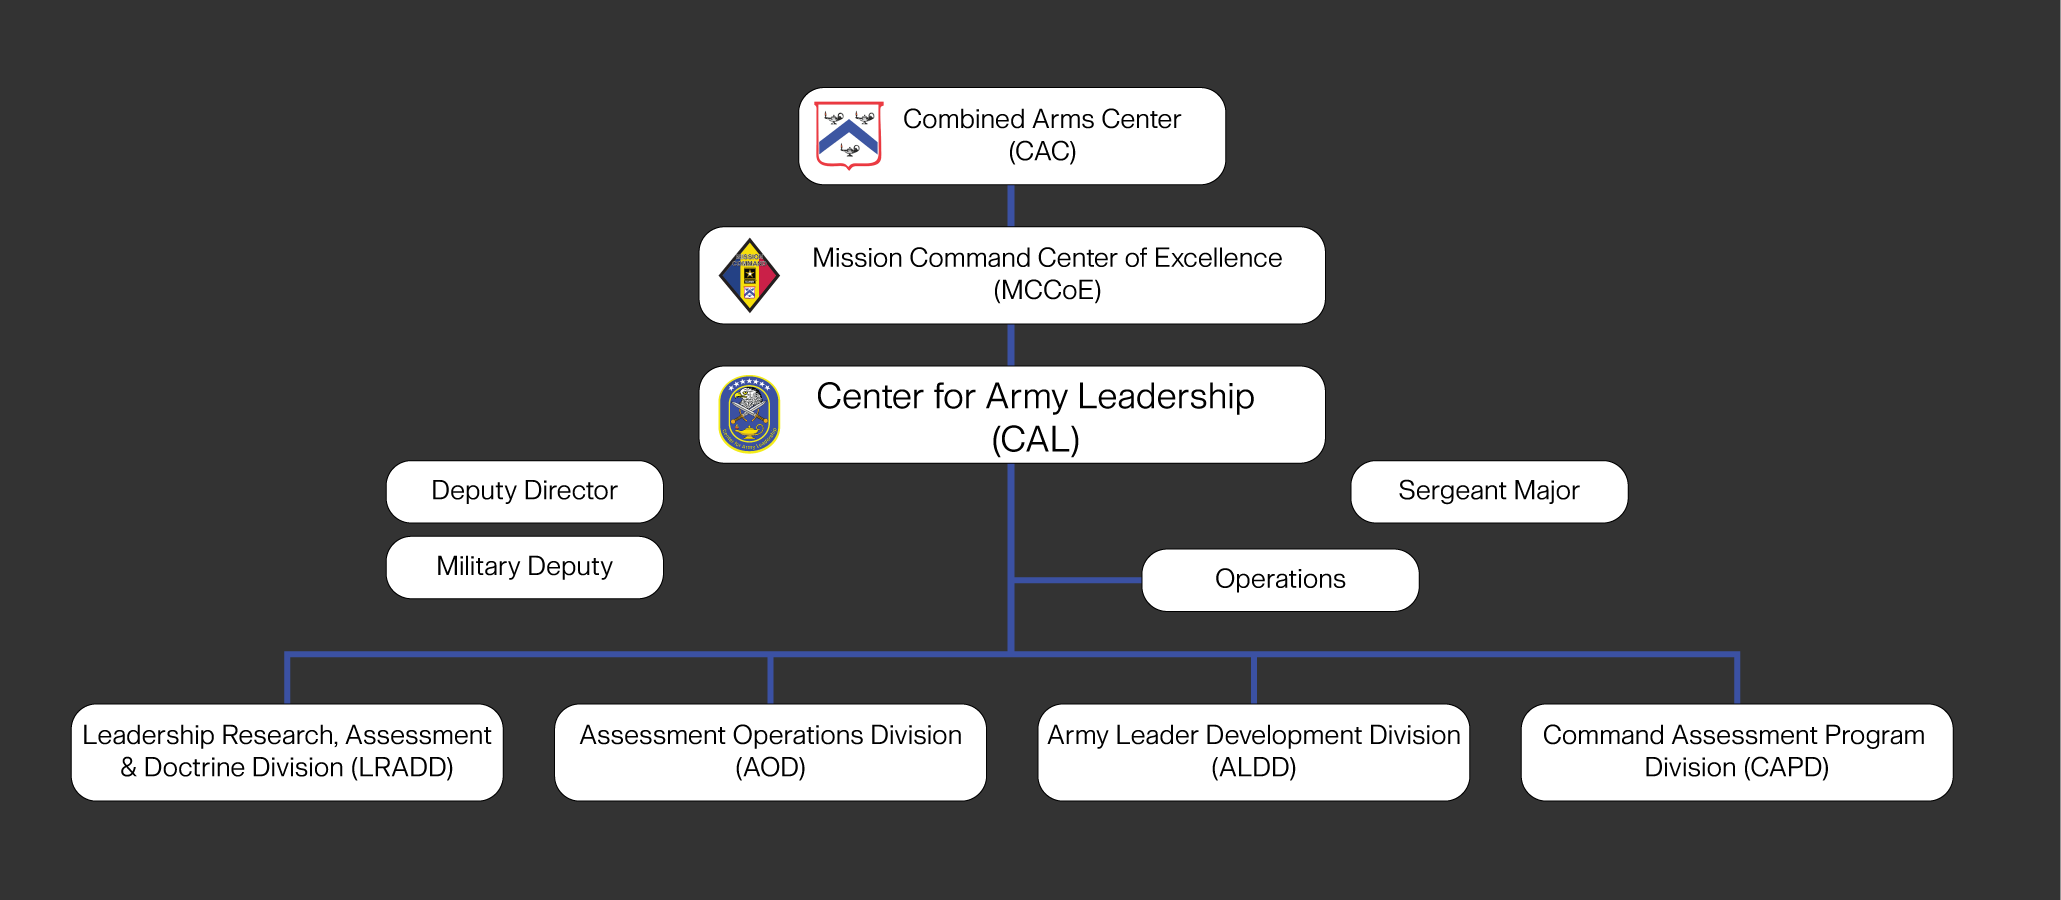 Organization Structure Image